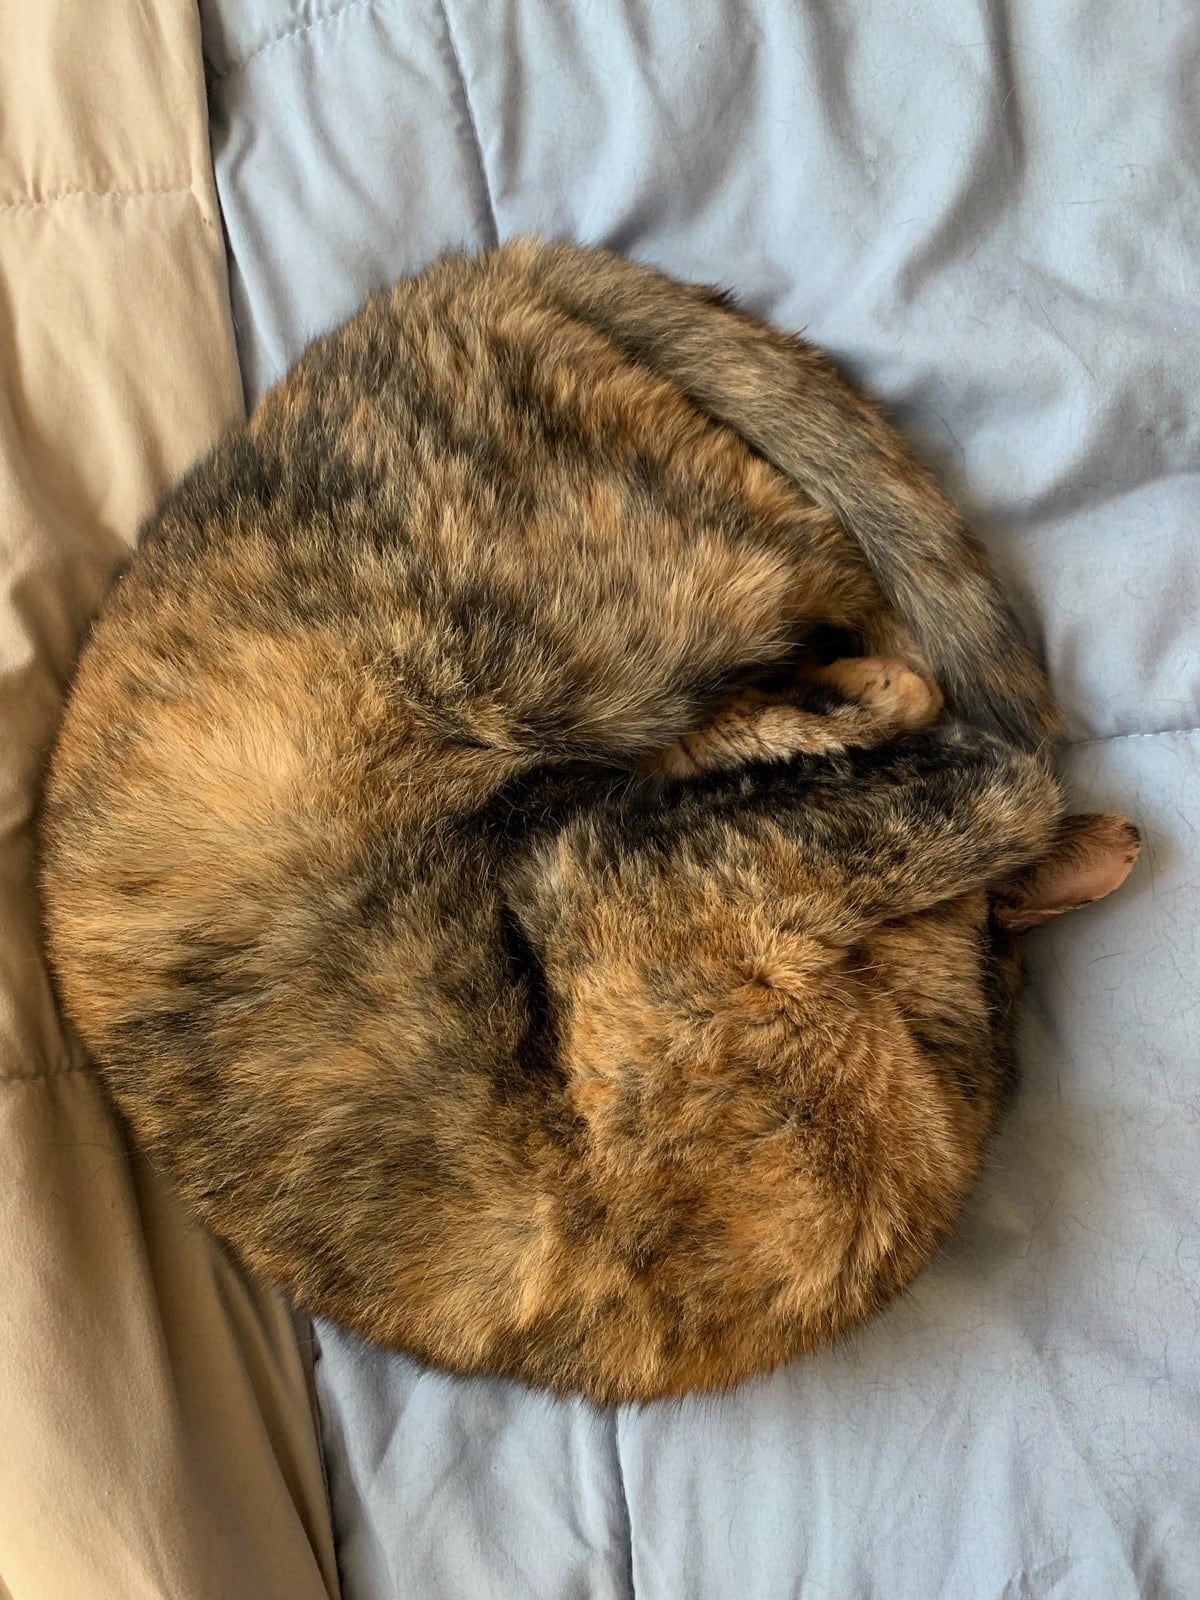 Leela curled up